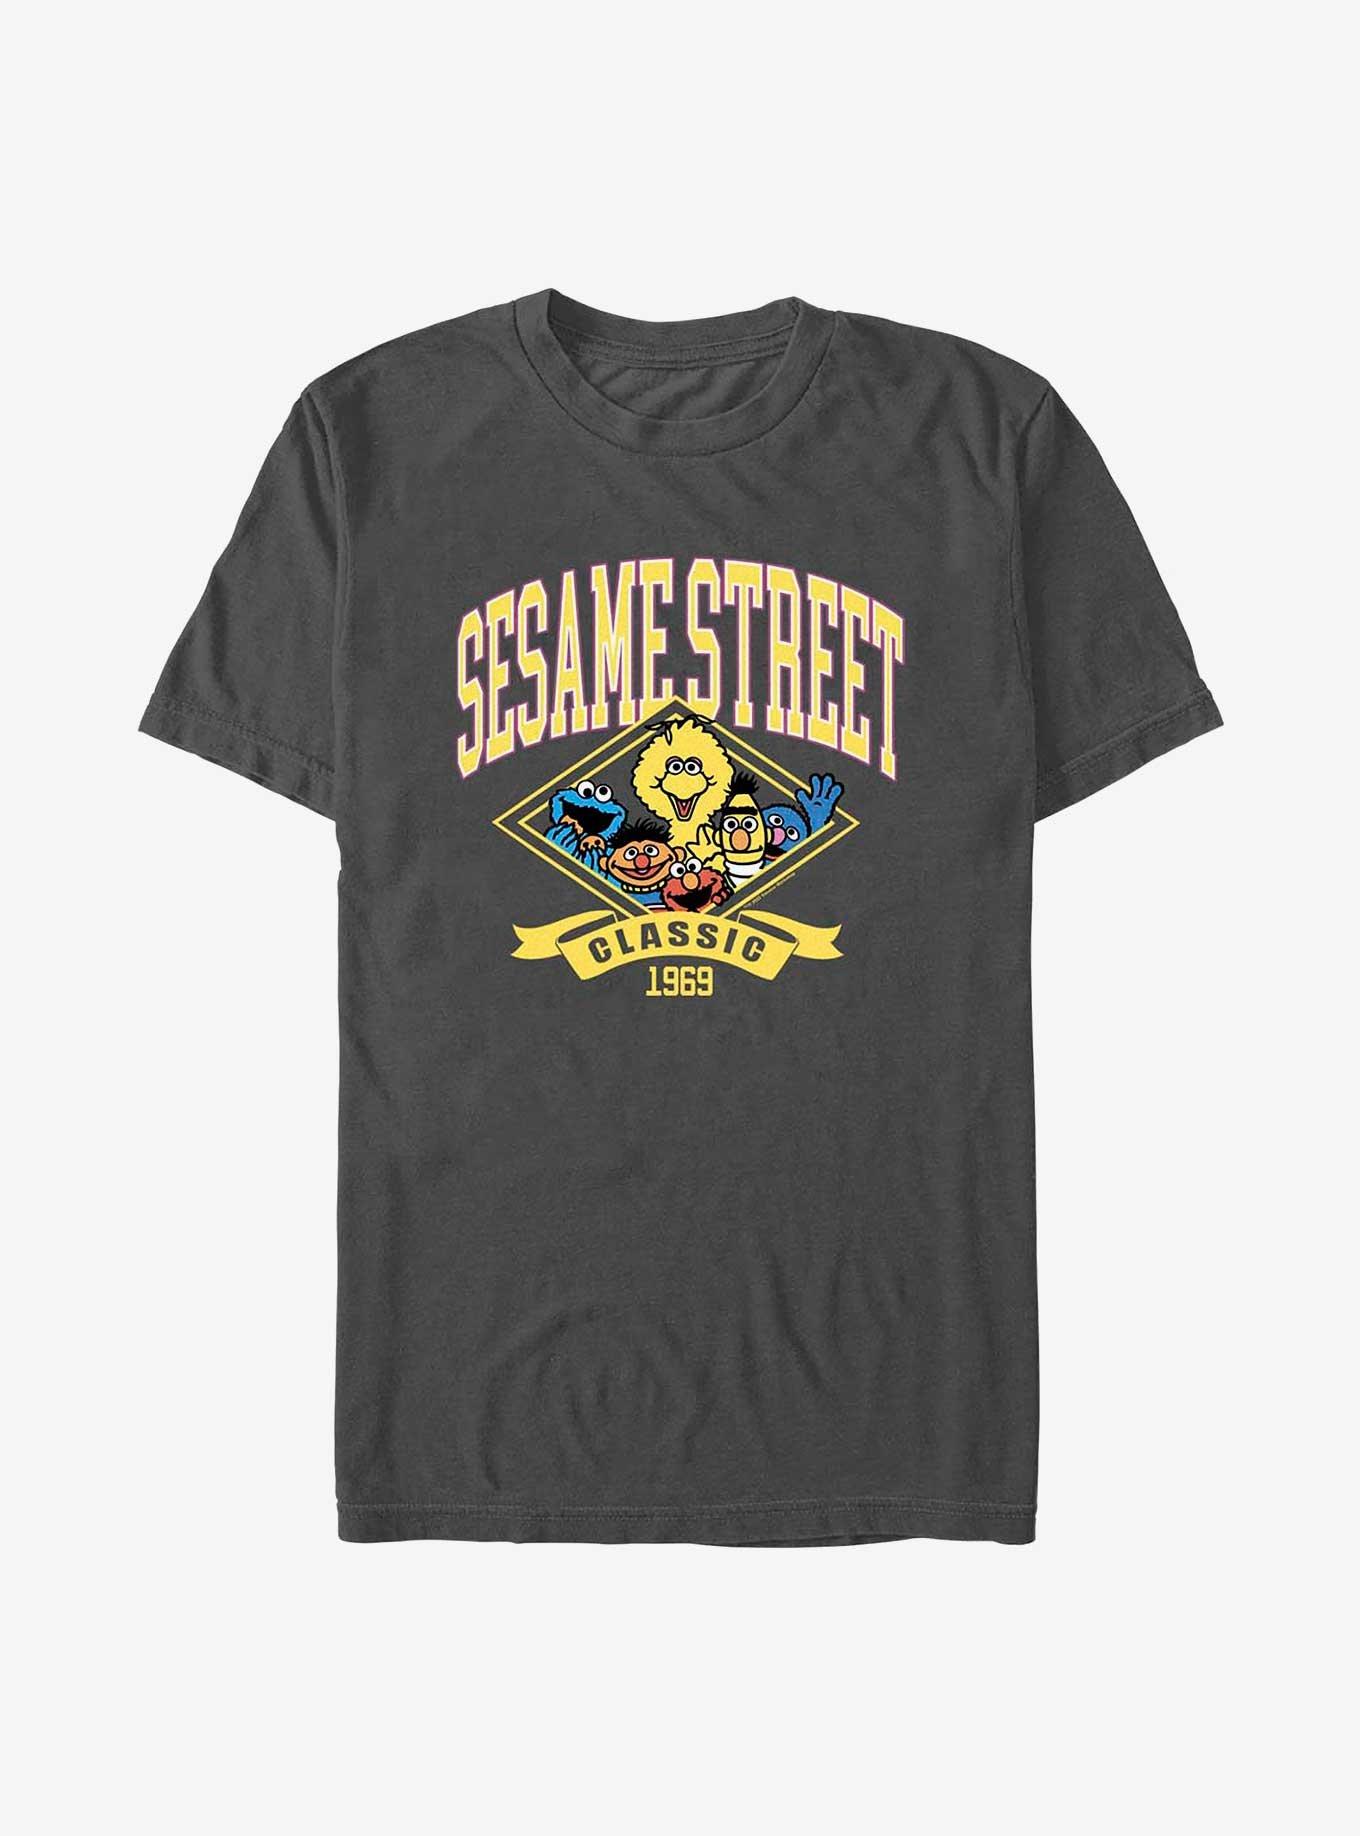 Sesame Street Classic 1969 T-Shirt, CHARCOAL, hi-res